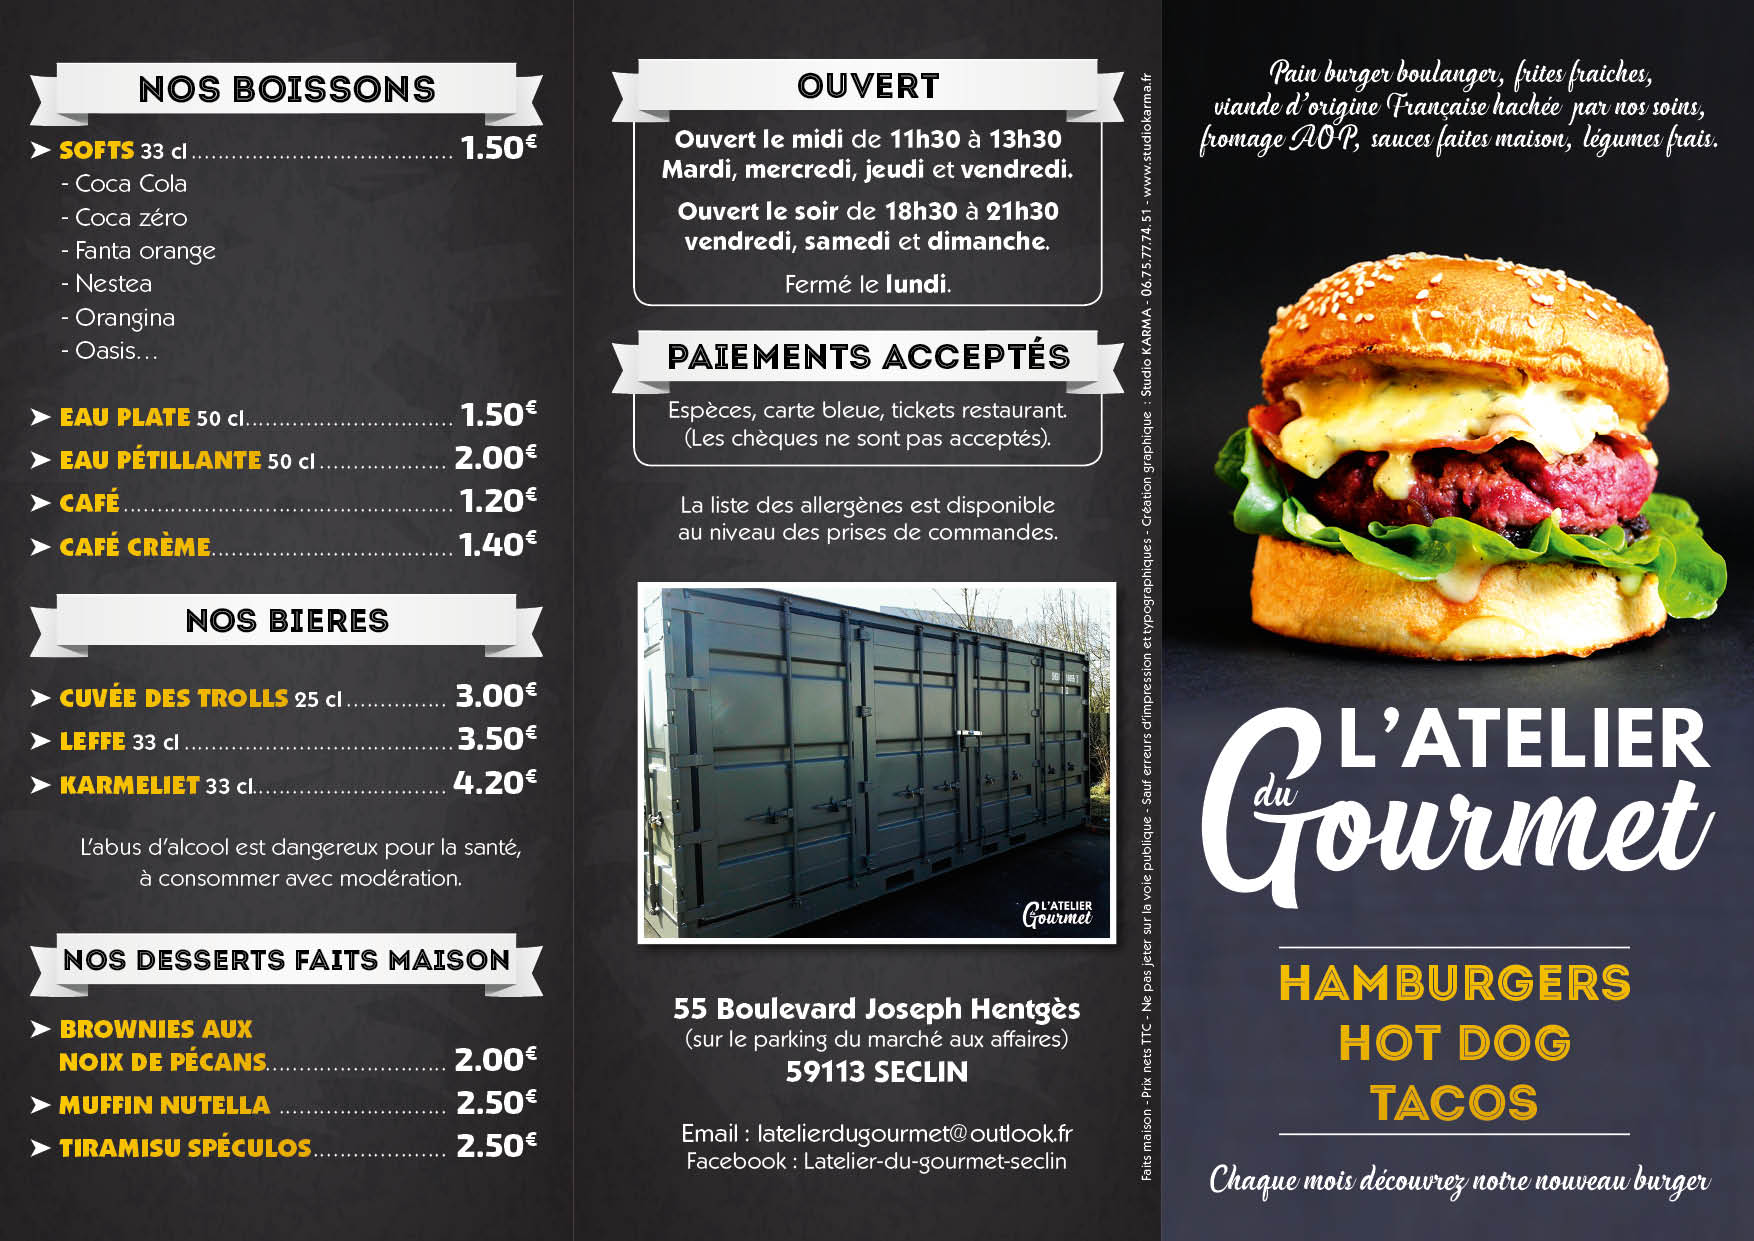 Leaflet Design for Burger Tacos Restaurant 1 - Studio Karma - Graphic designer - Houston Humble Texas